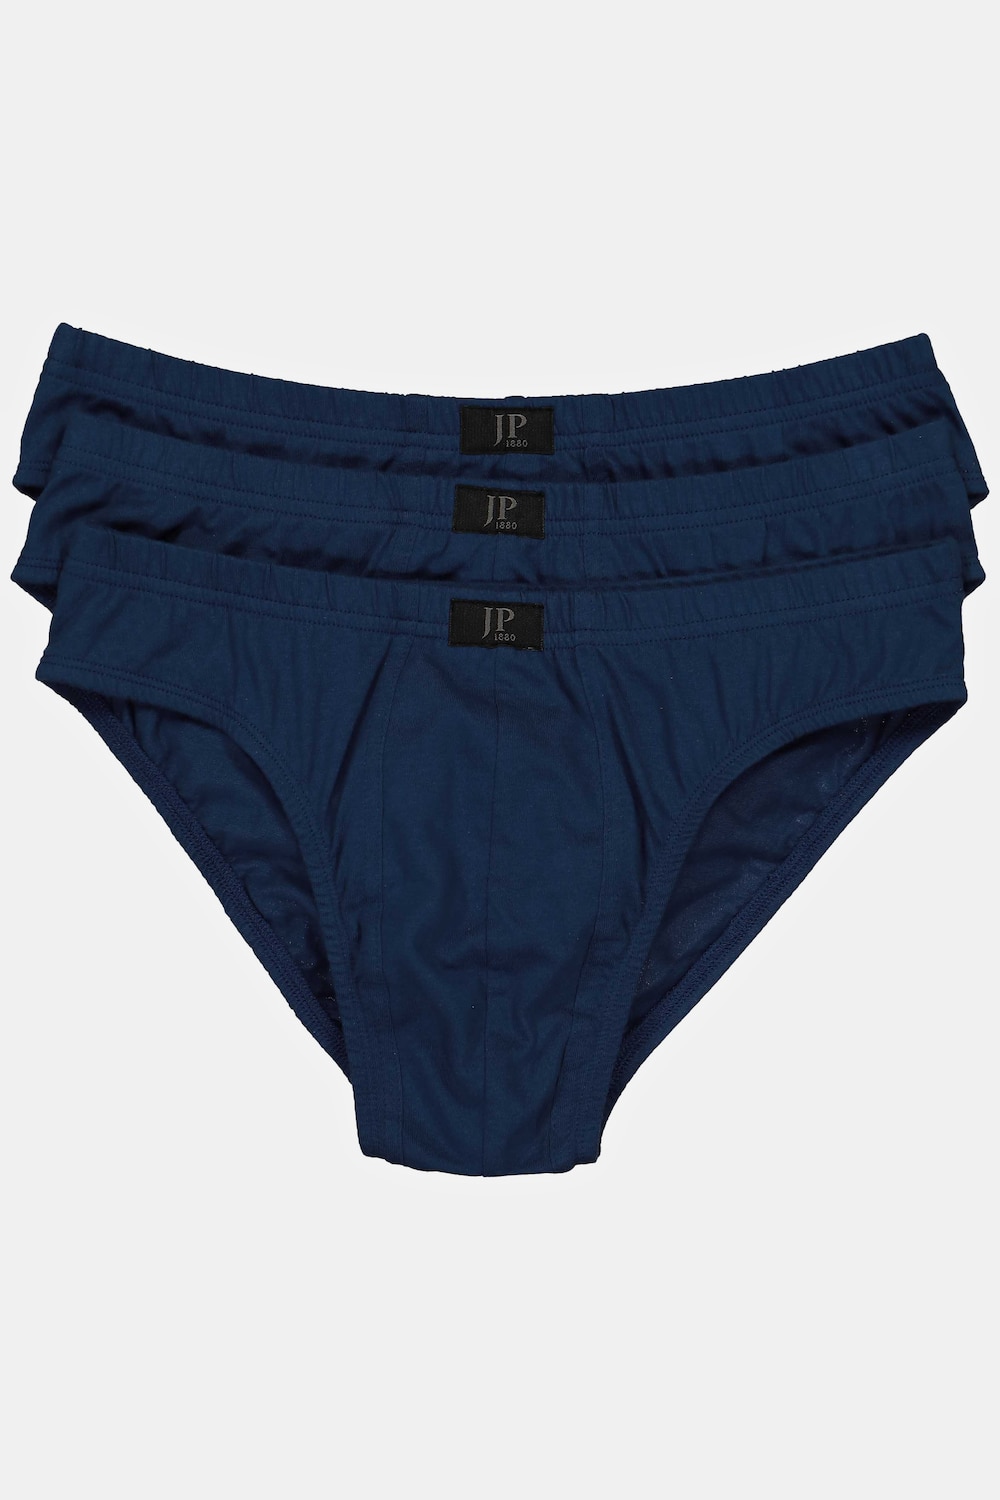 grandes tailles slips, hommes, bleu, taille: 16, coton, jp1880